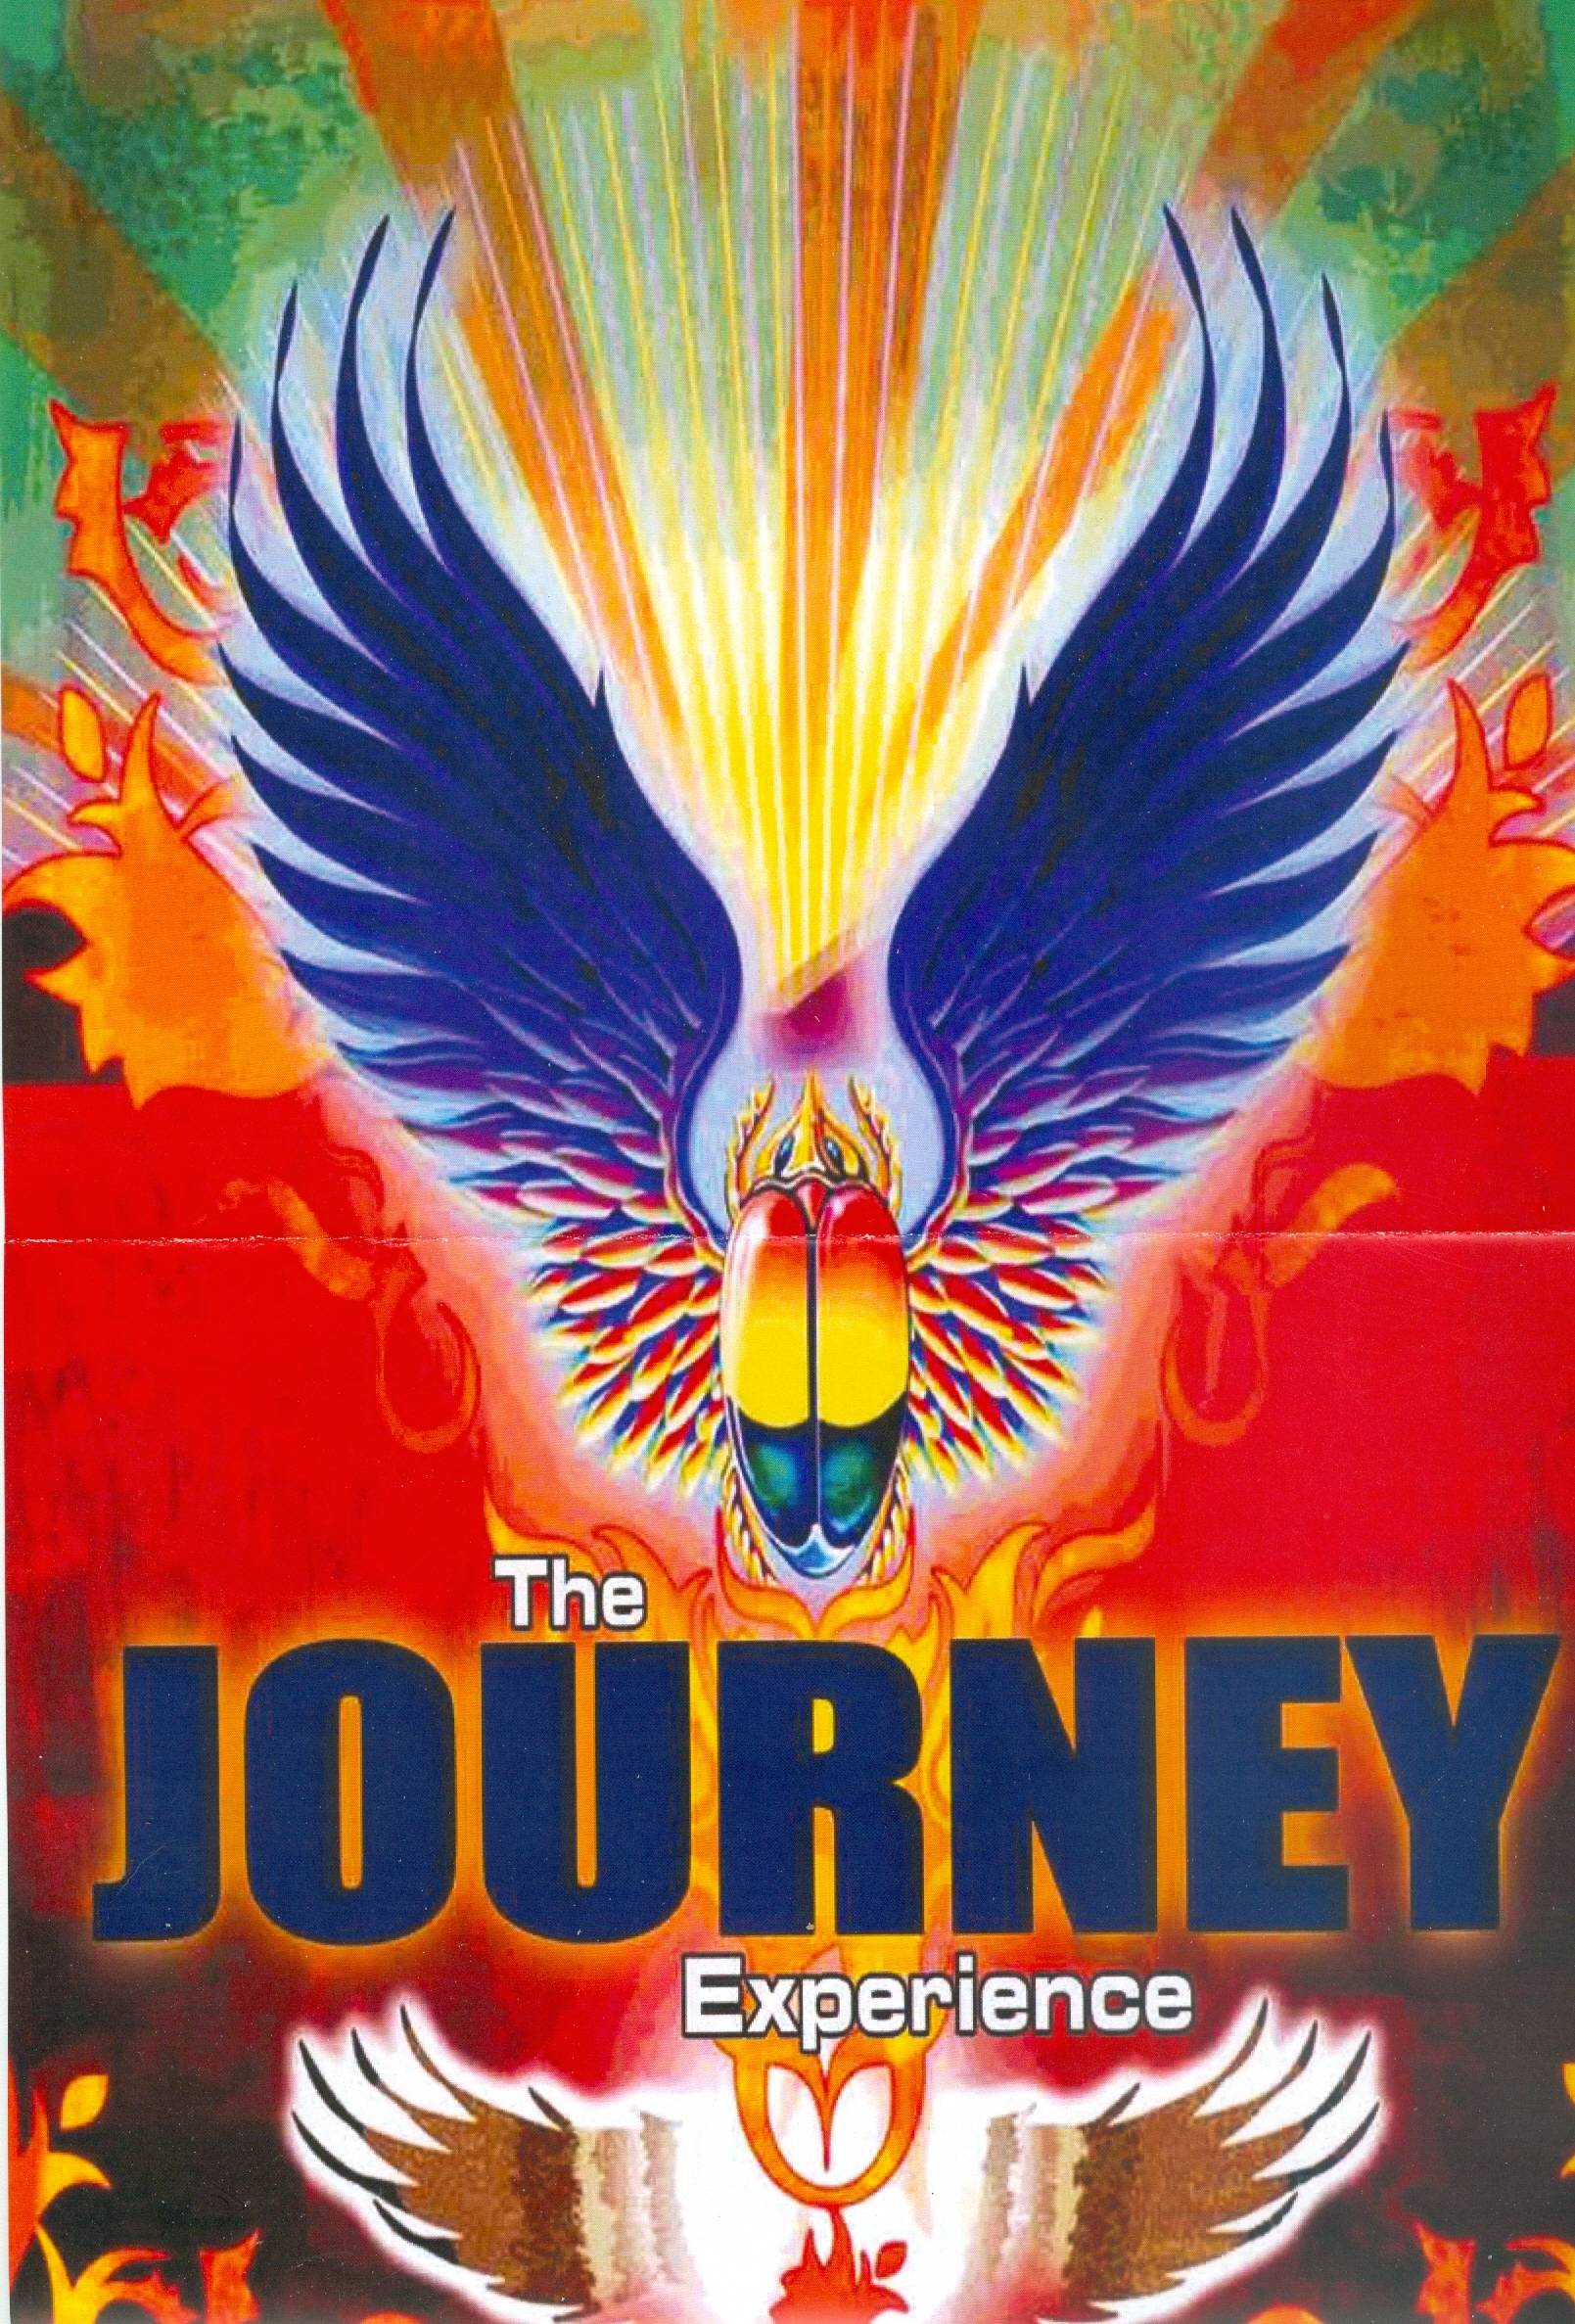 Journey Band Logo - Journey concert Aug 16 – sort of